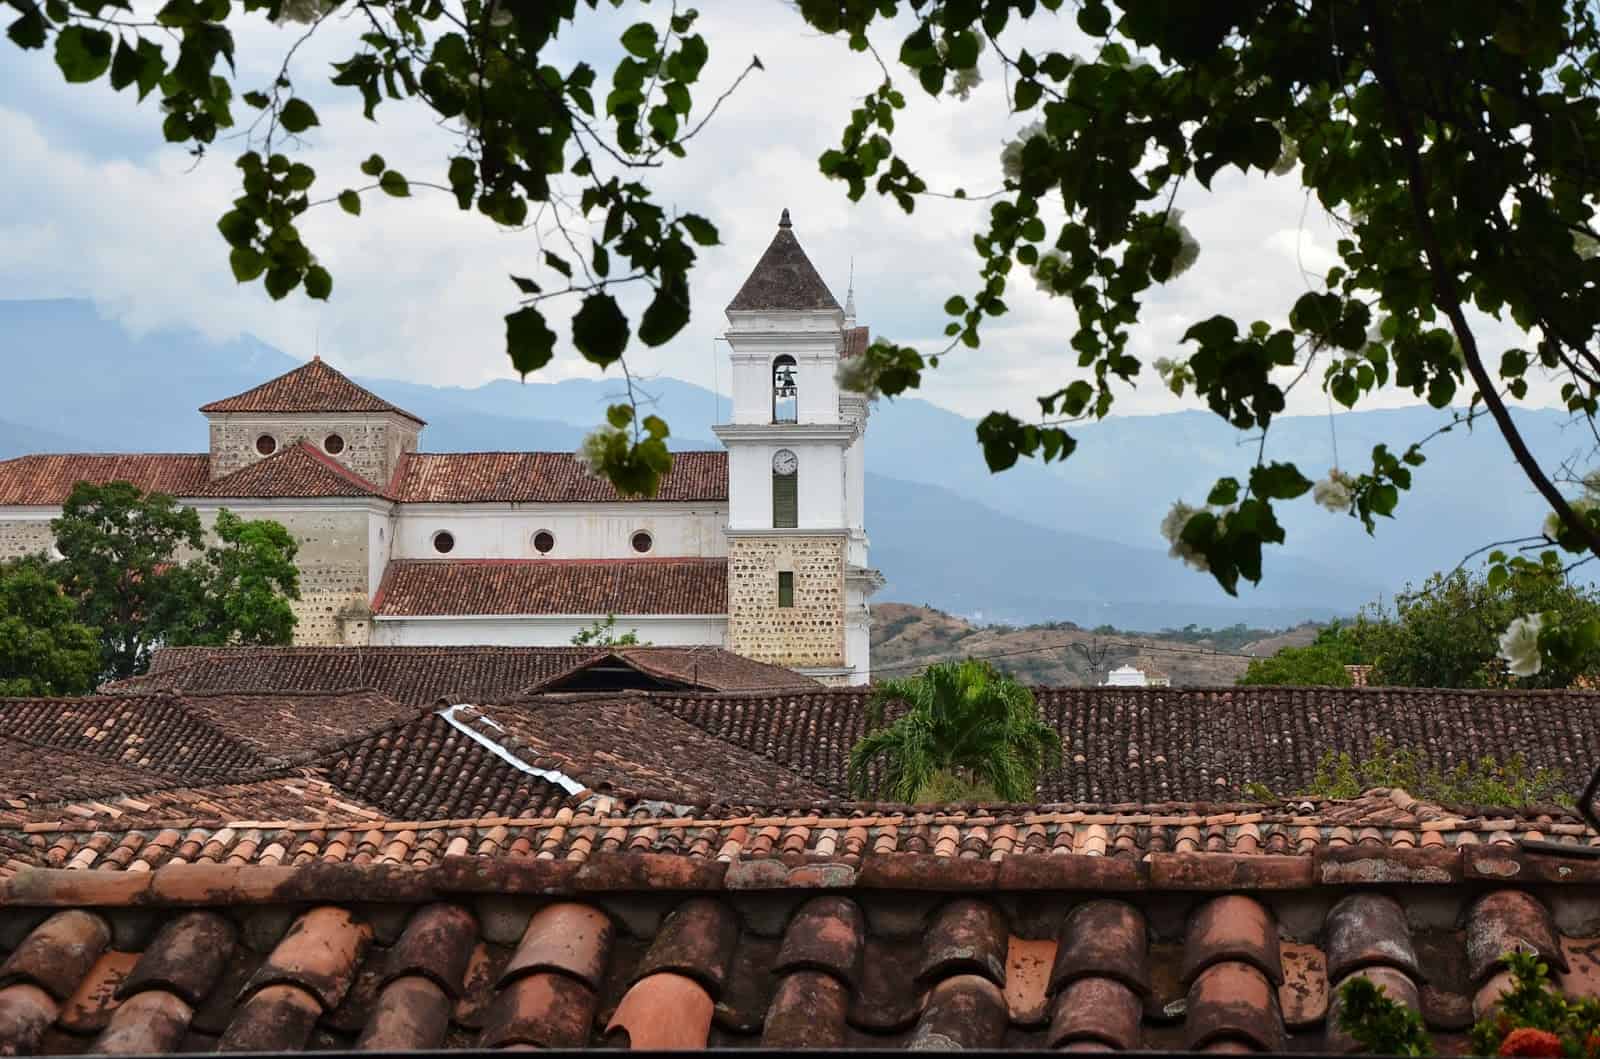 View from Hotel Mariscal Robledo including the Cathedral of Santa Fe de Antioquia in Santa Fe de Antioquia, Colombia